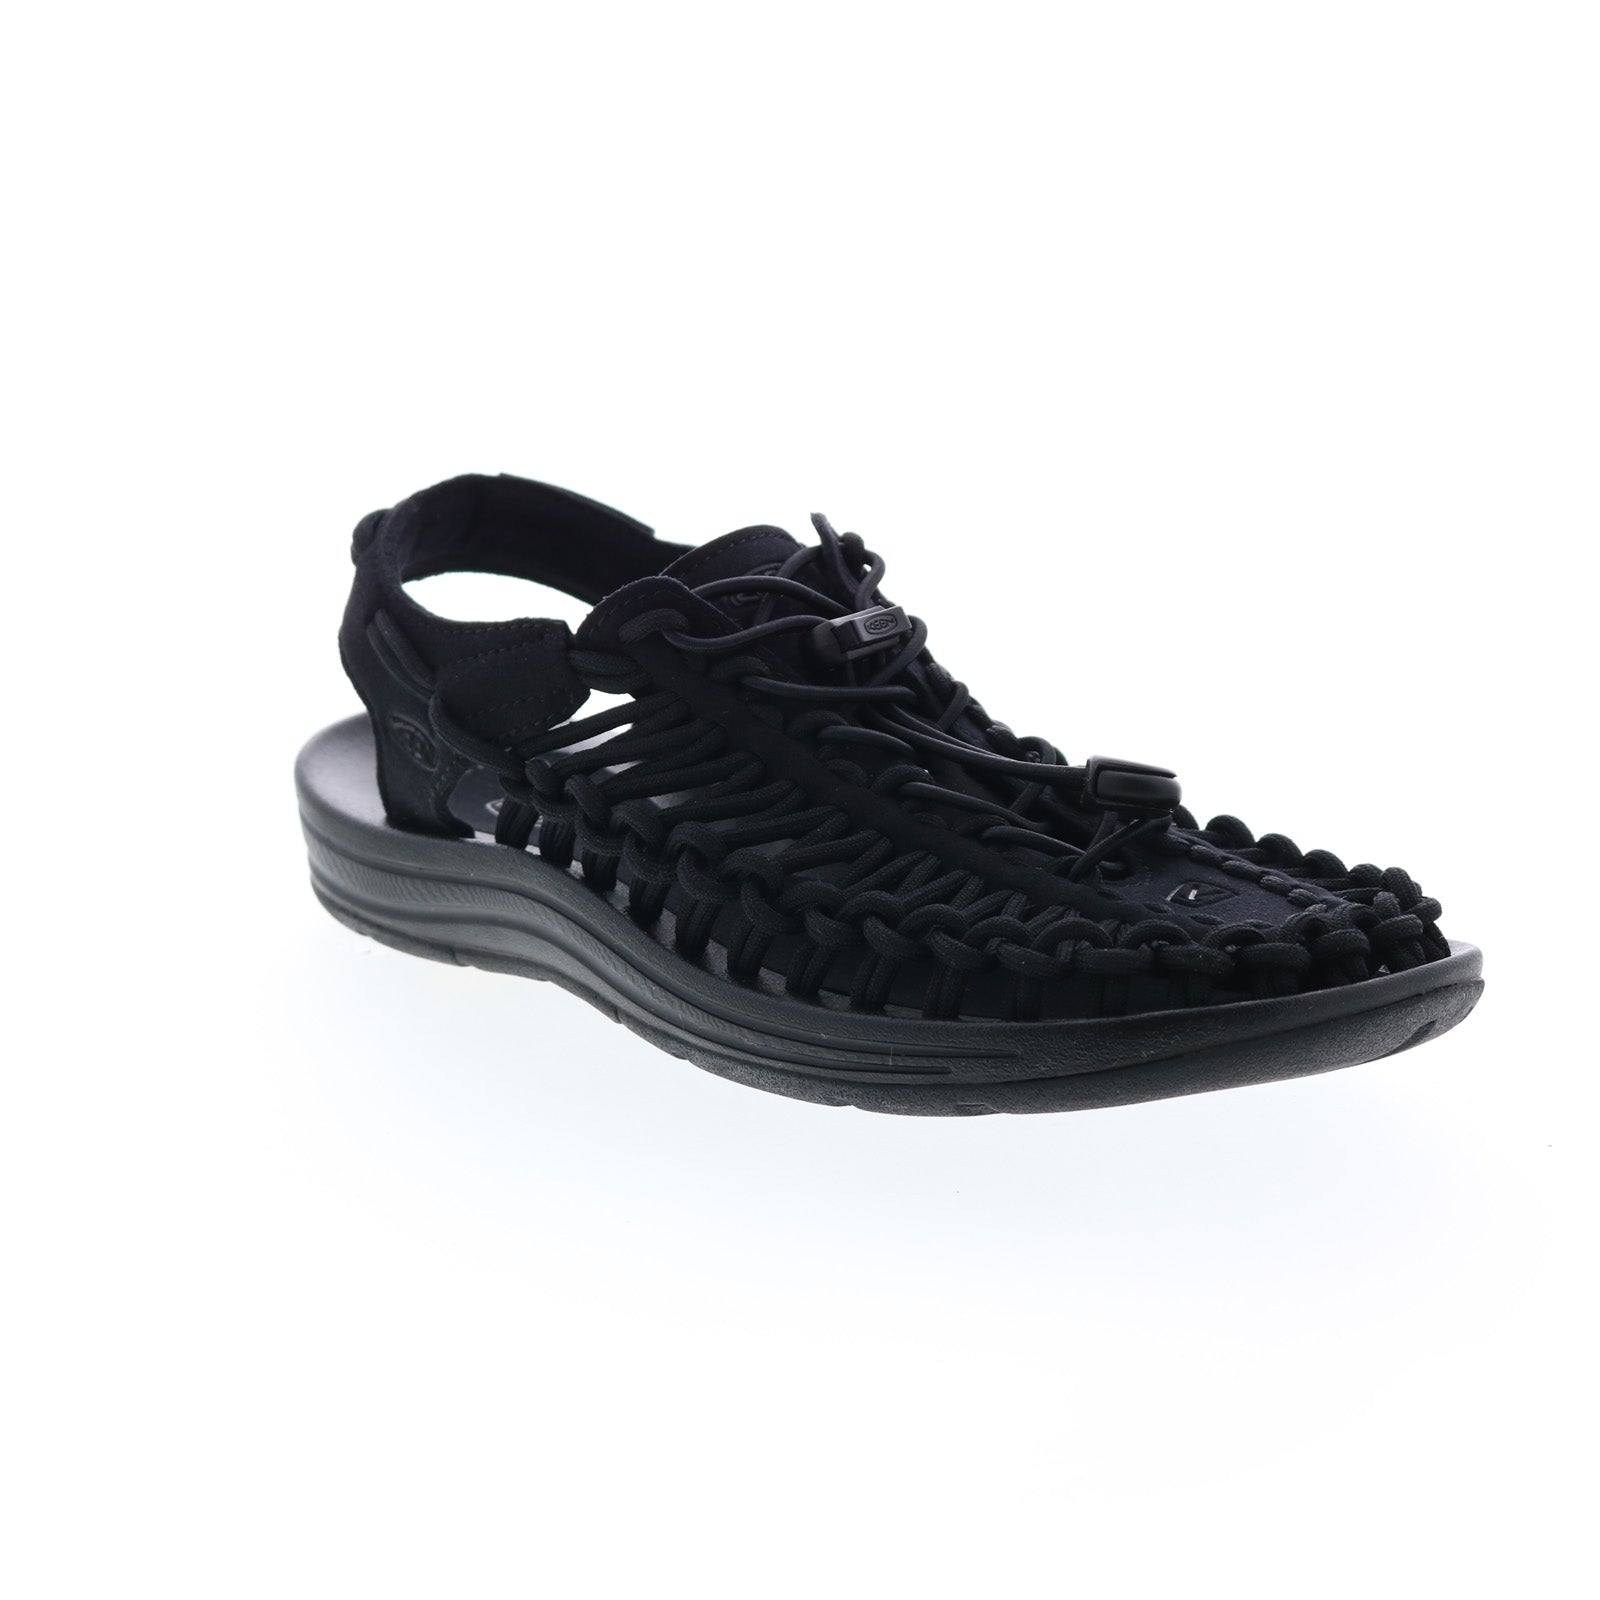 Keen Uneek 1014099 Womens Black Canvas Strap Sport Sandals Shoes